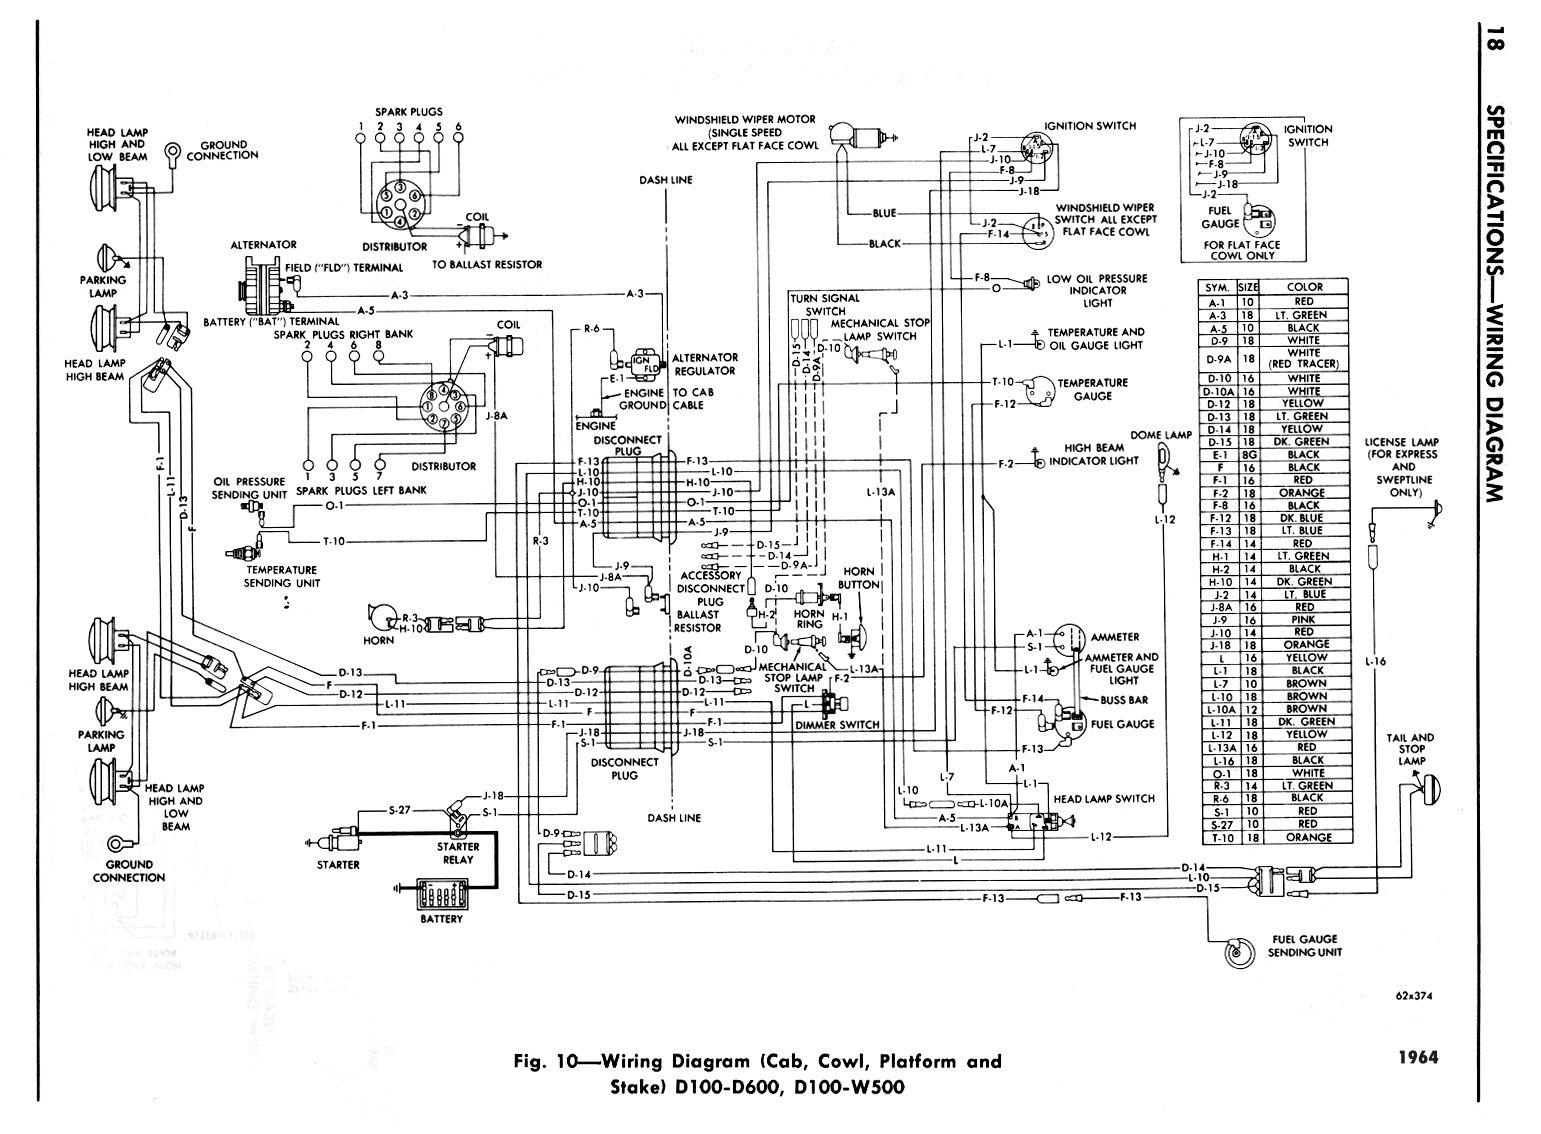 Wiring Diagrams 60 66 Power Wagon Wm300